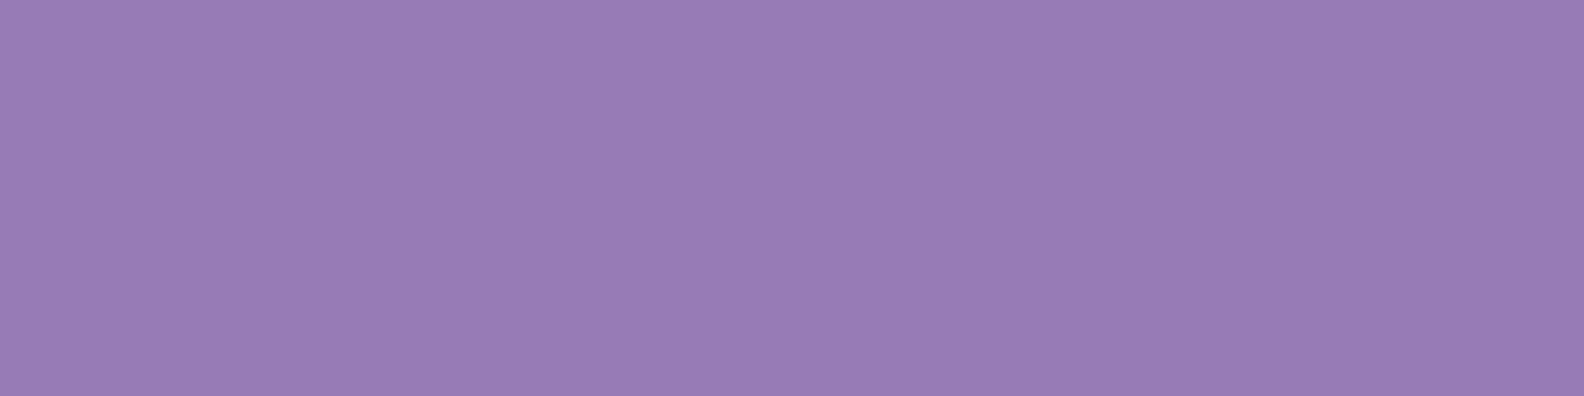 1584x396 Lavender Purple Solid Color Background